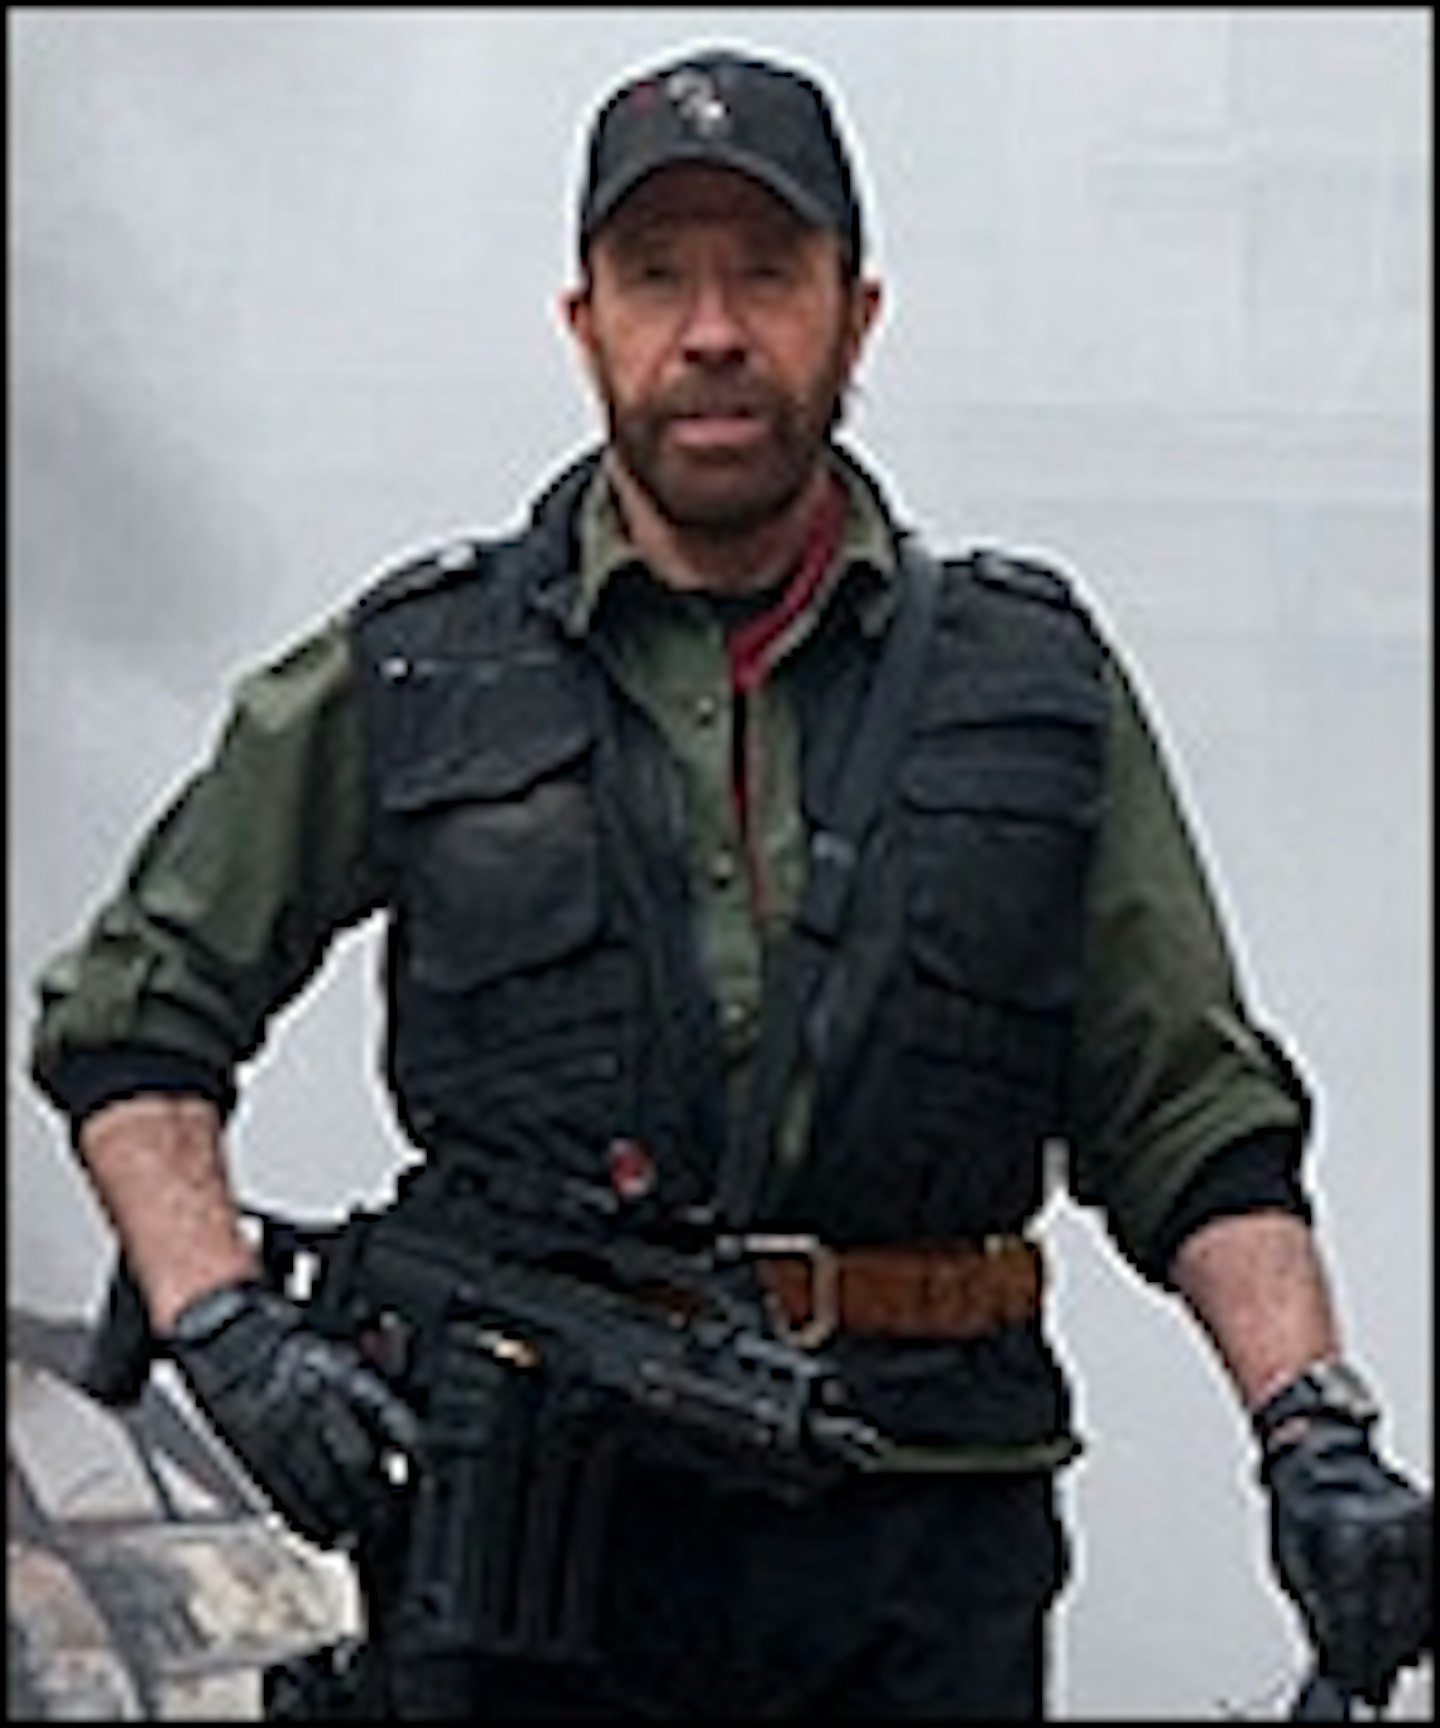 Chuck Norris Expendables 2 Image Lands